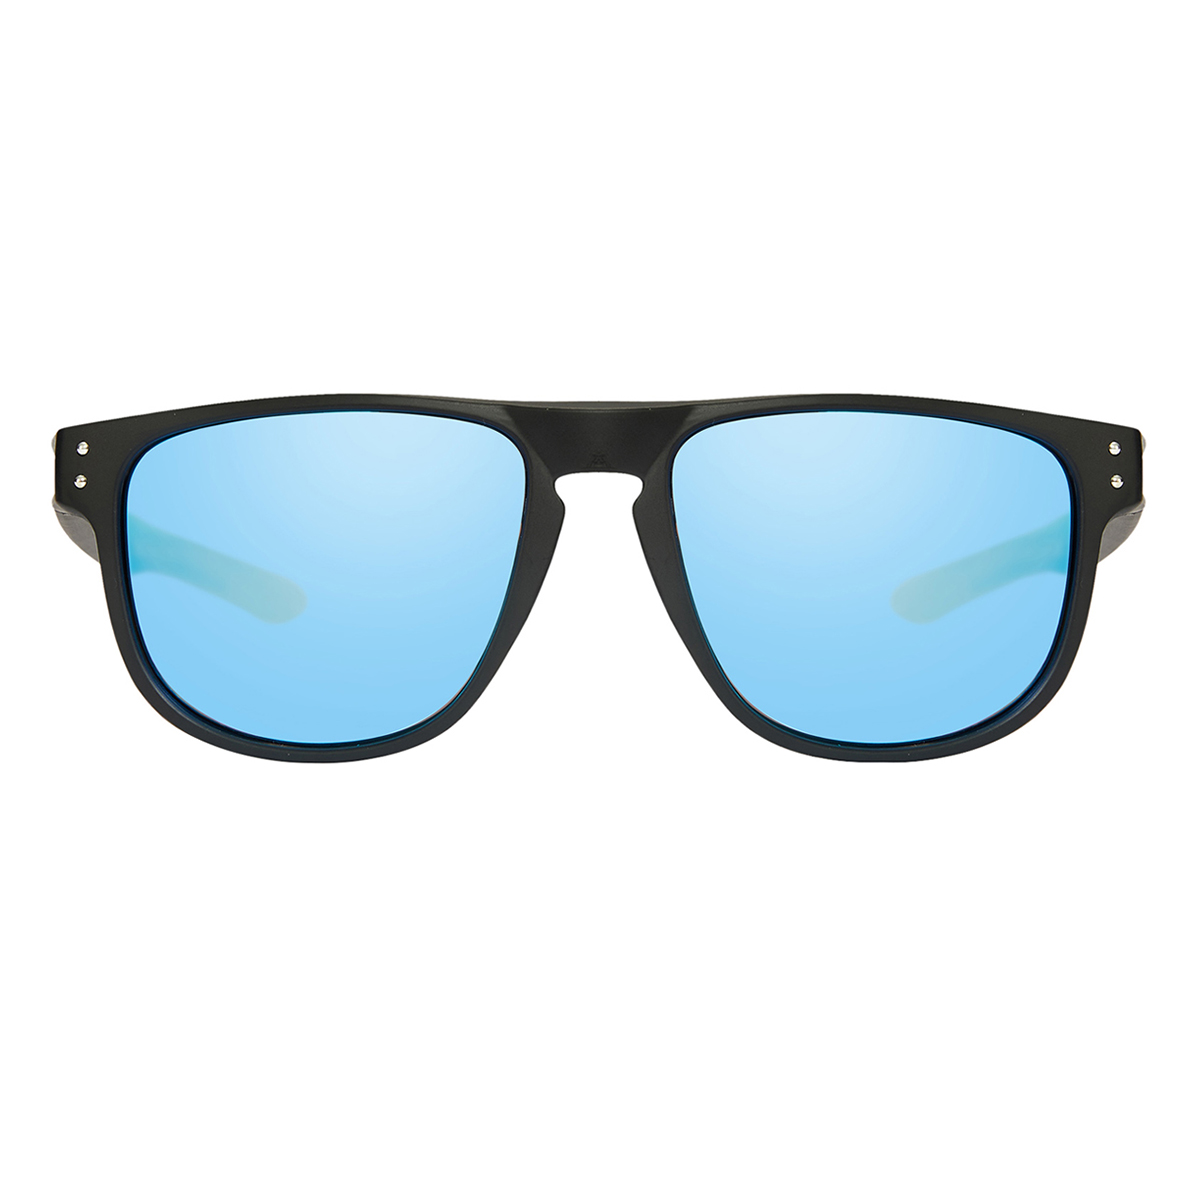 square black1 sunglasses